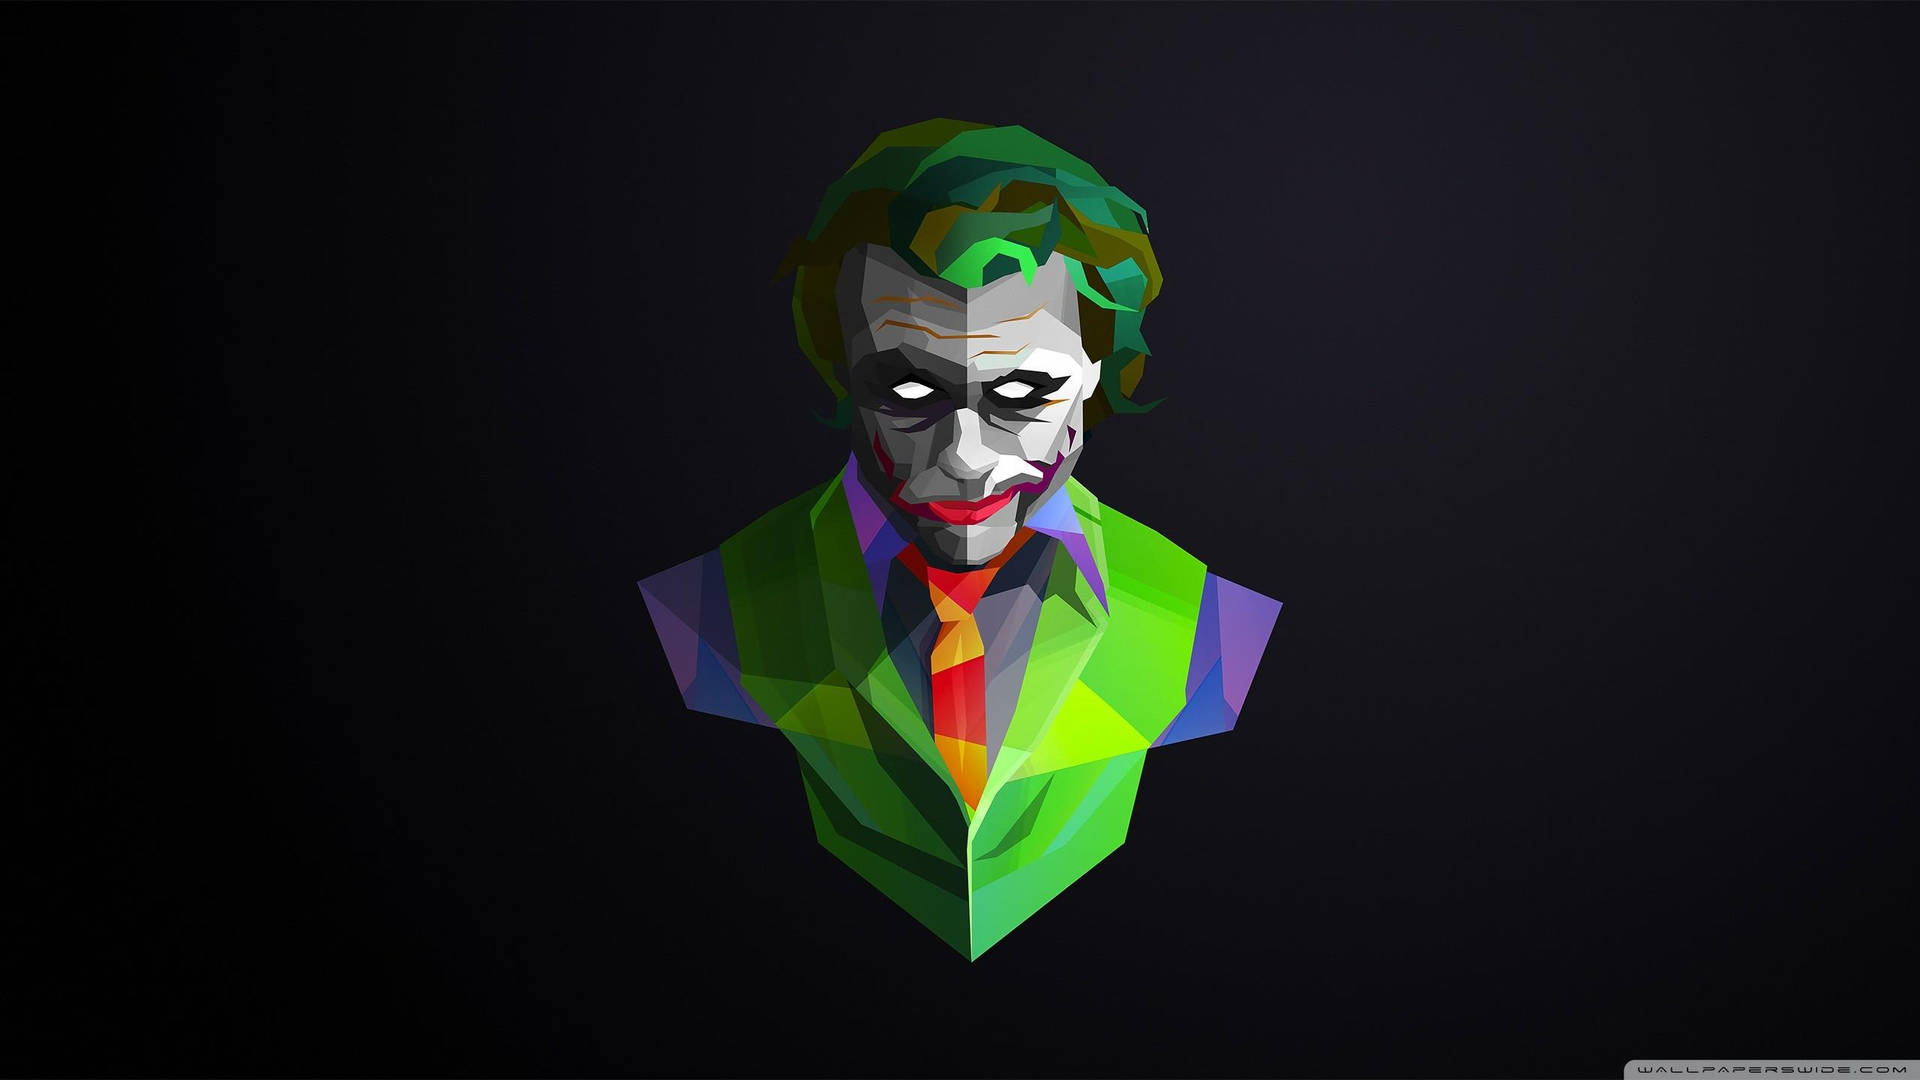 Joker 2560X1440 Wallpaper and Background Image